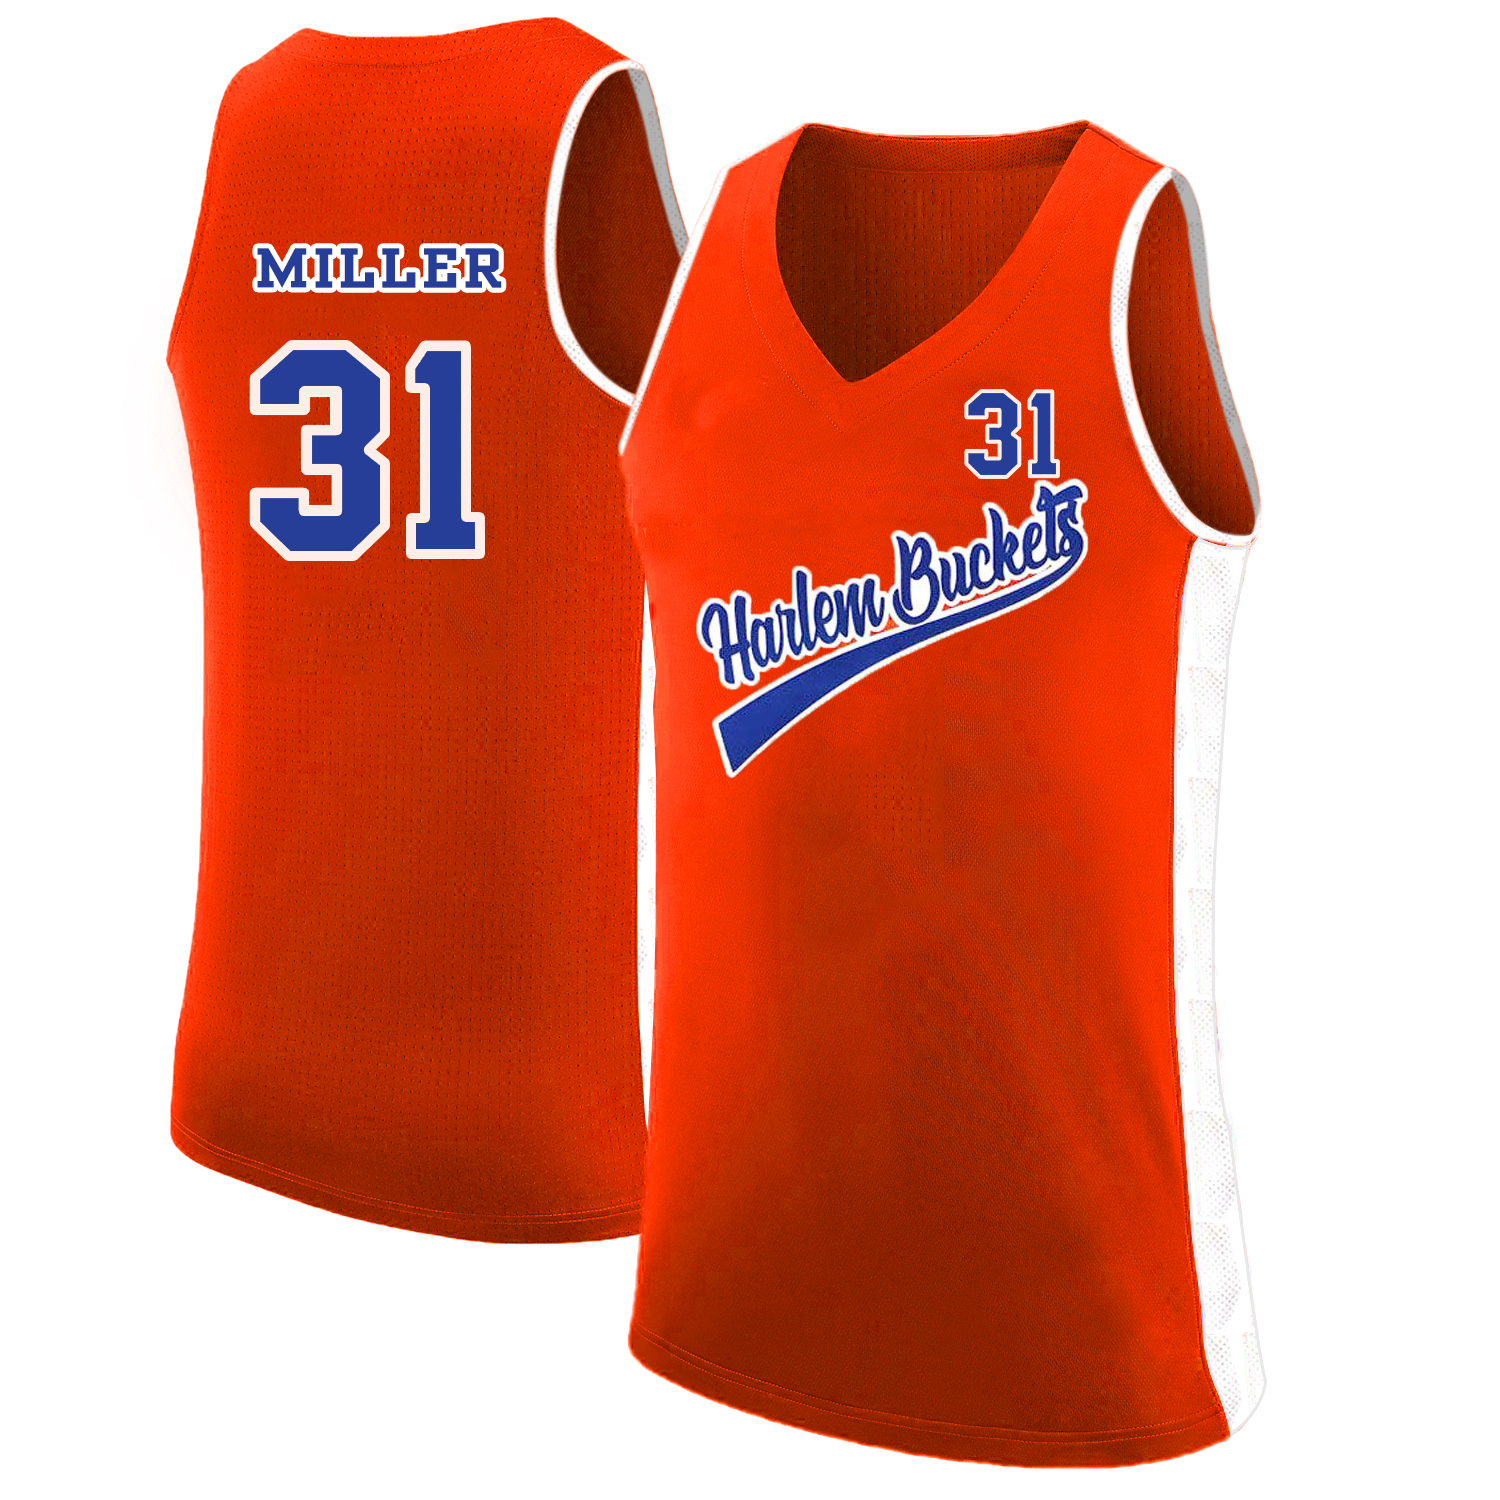 Harlem Buckets 31 Reggie Miller Orange Uncle Drew Basketball Jersey